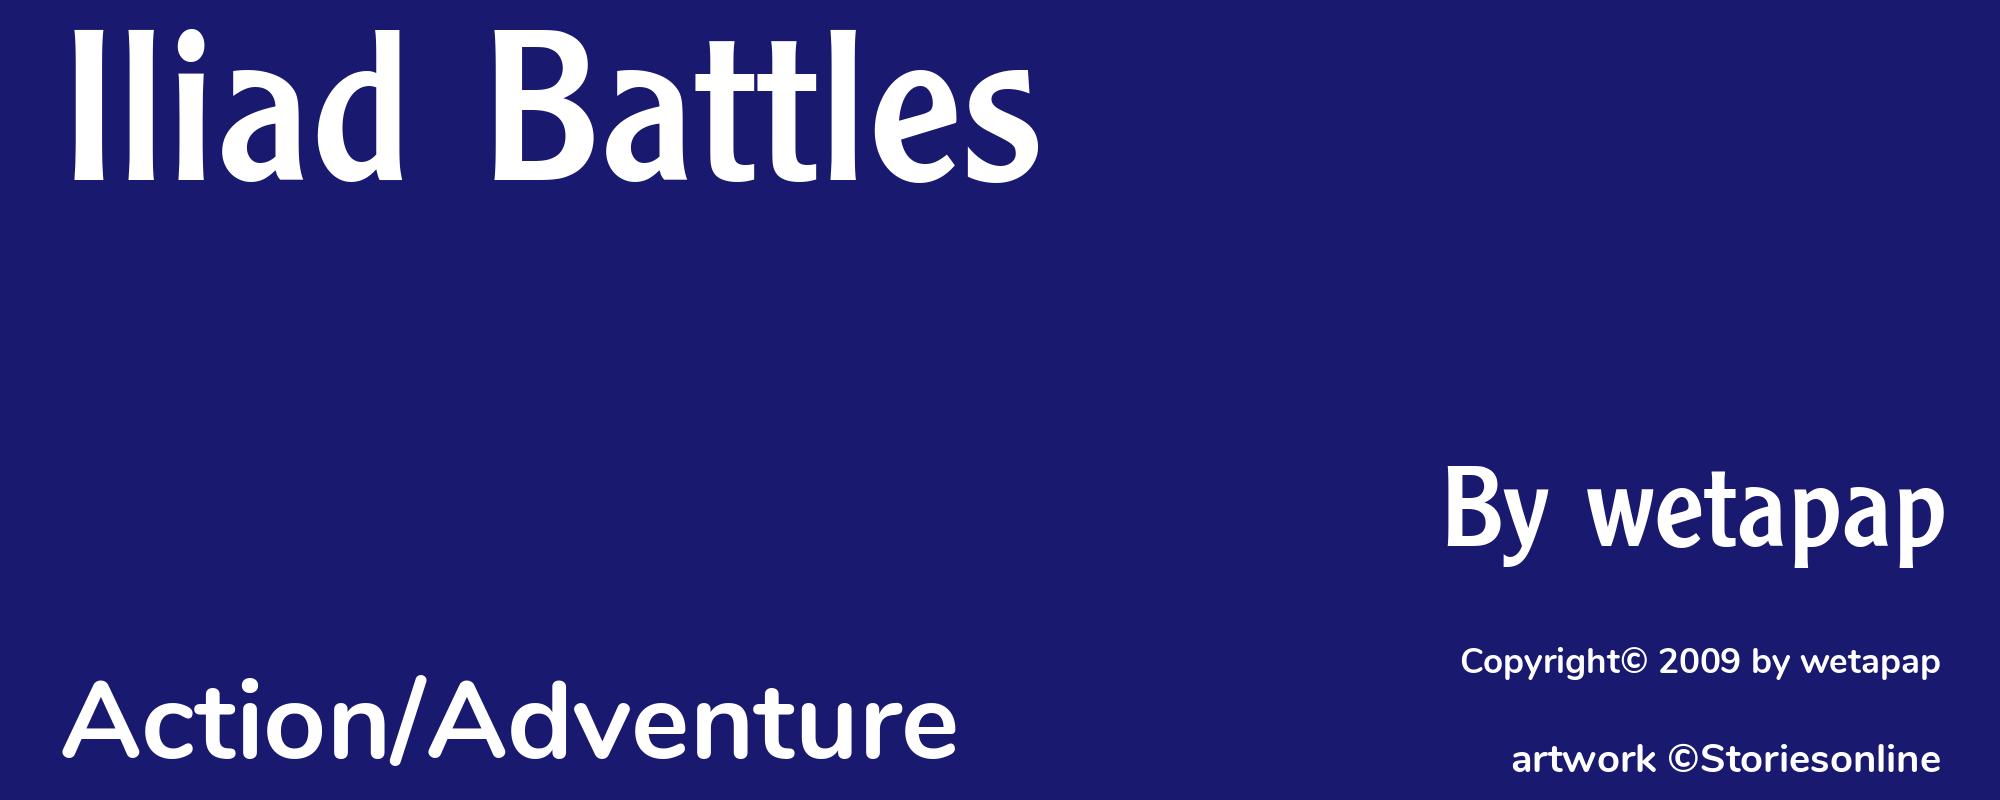 Iliad Battles - Cover